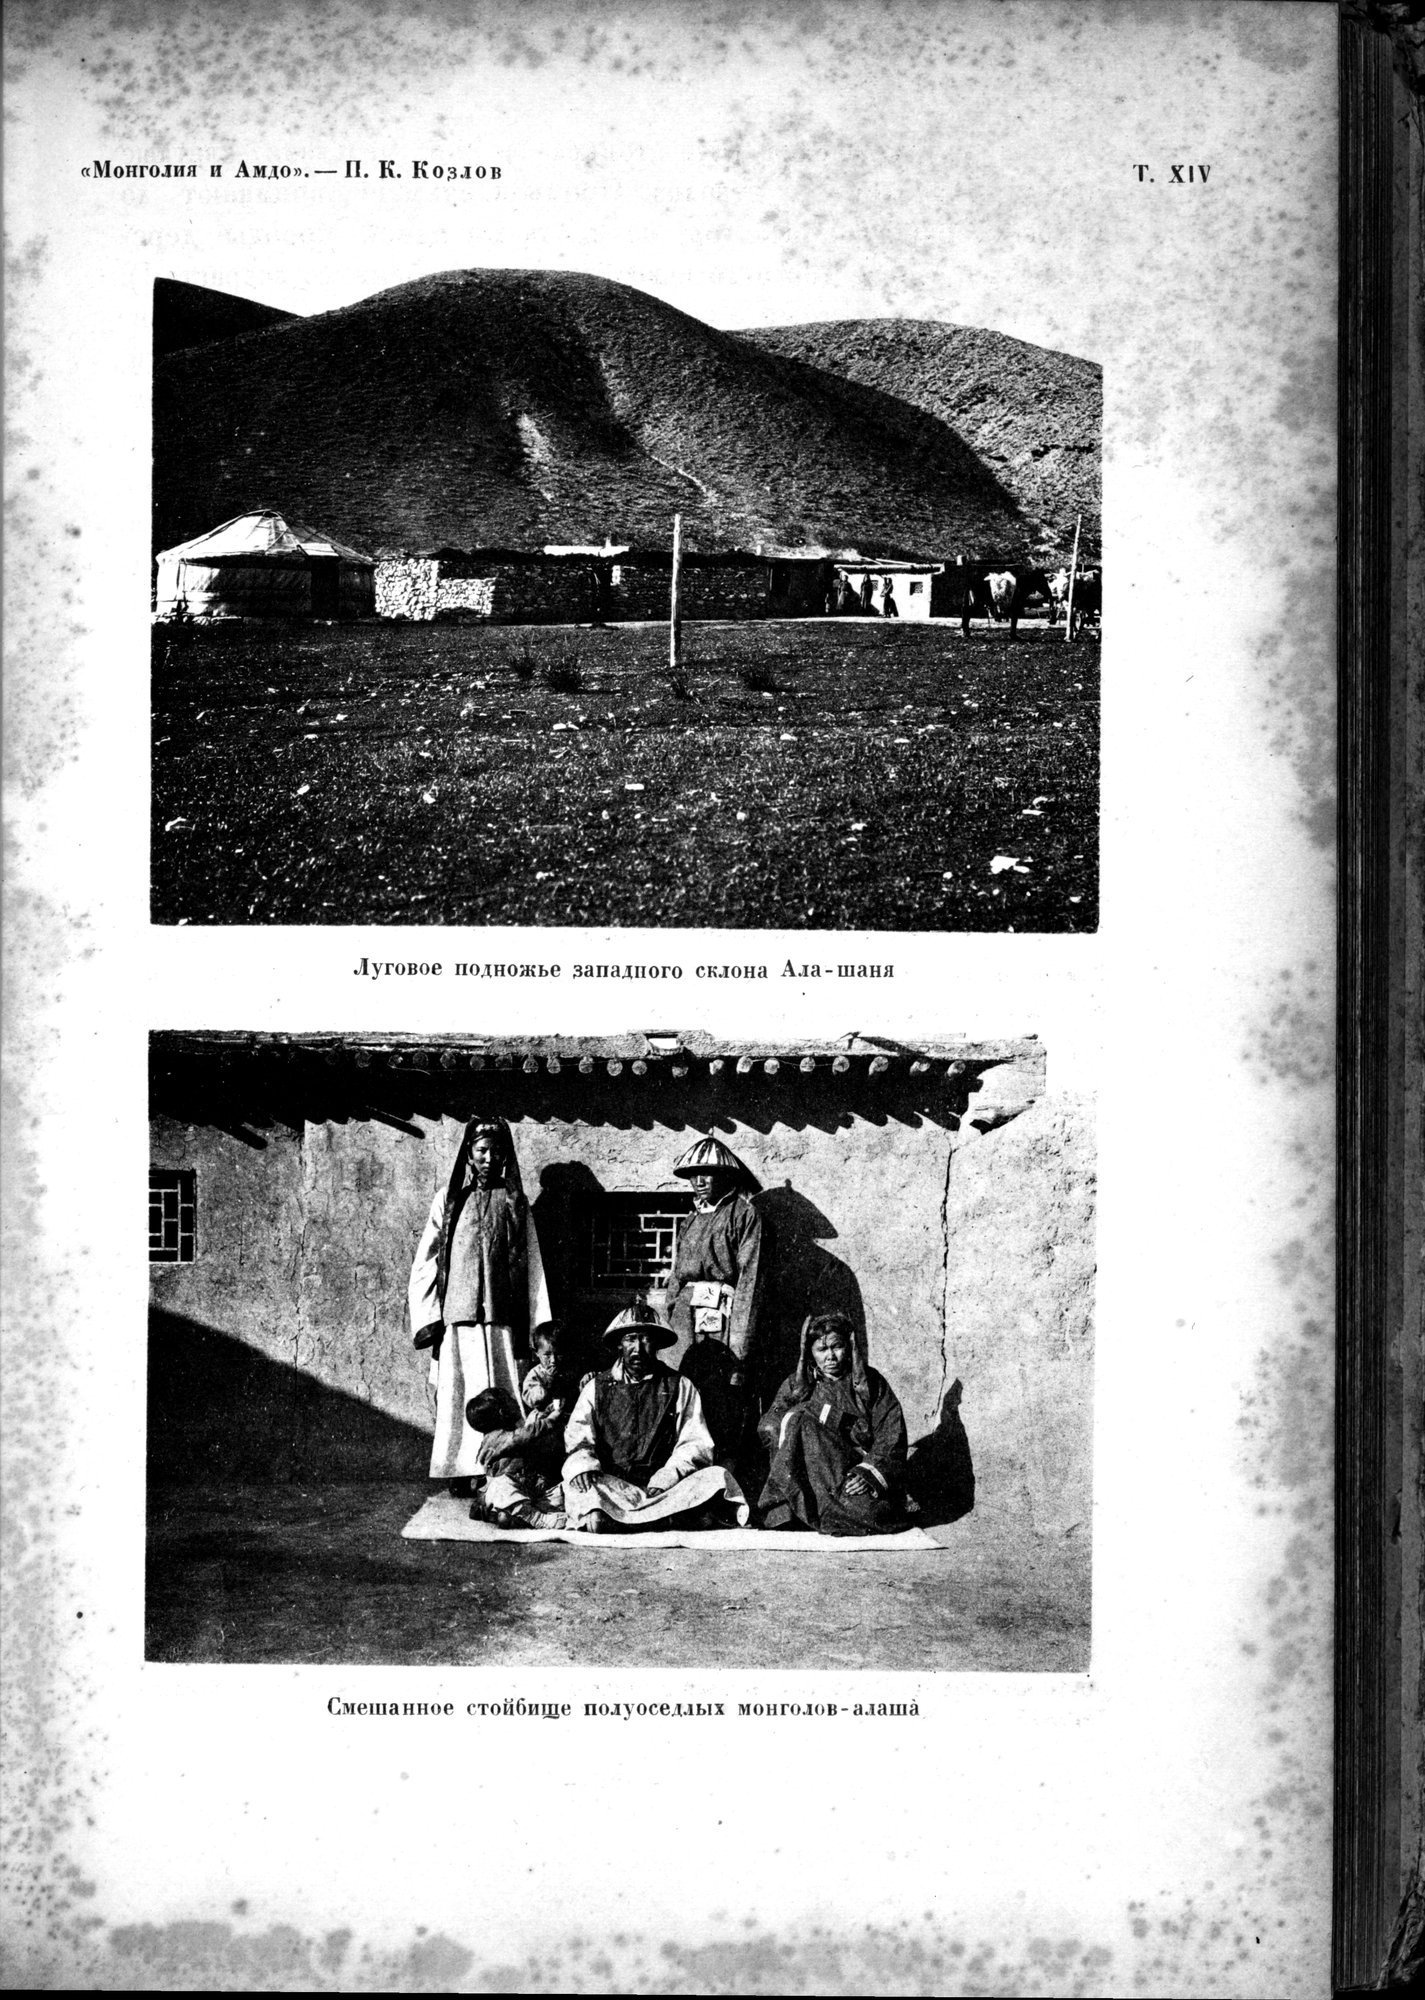 Mongoliya i Amdo i mertby gorod Khara-Khoto : vol.1 / Page 235 (Grayscale High Resolution Image)